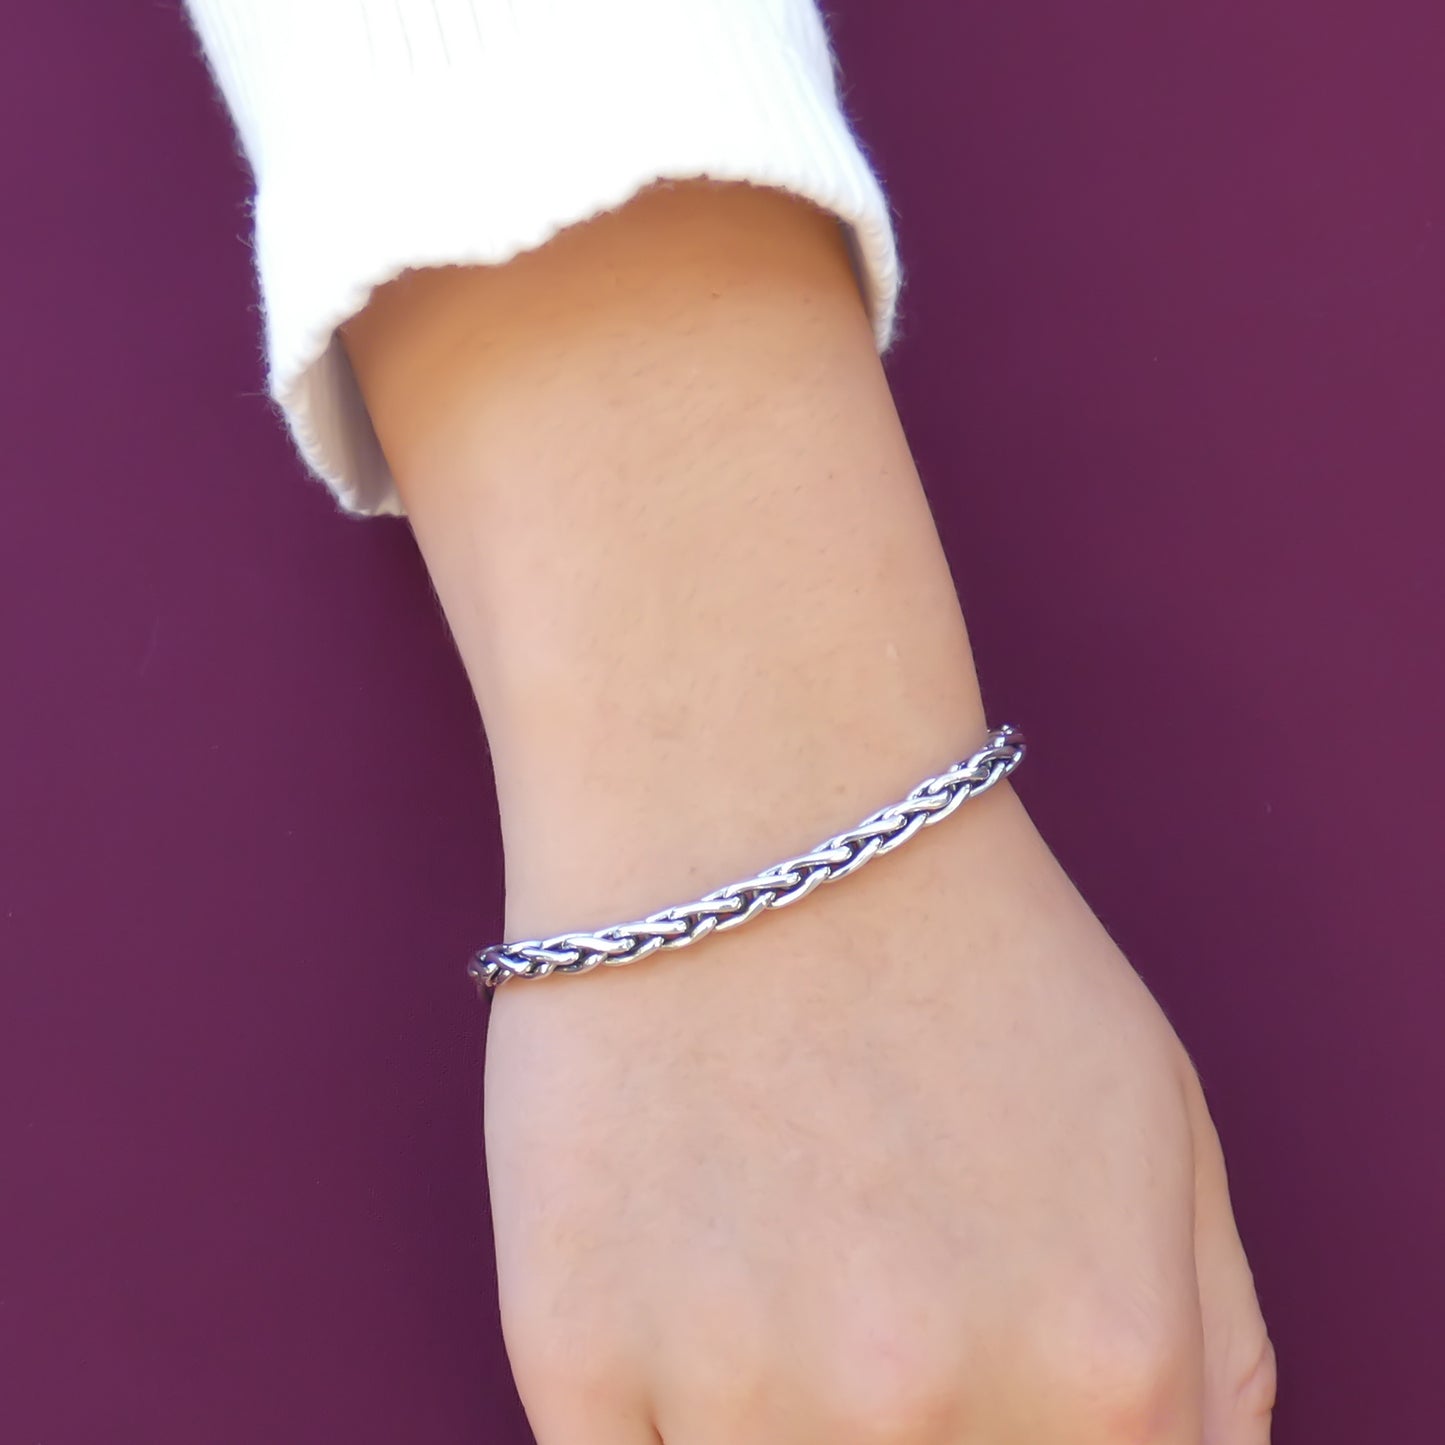 Woman wearing a thick silver wheat chain bracelet.